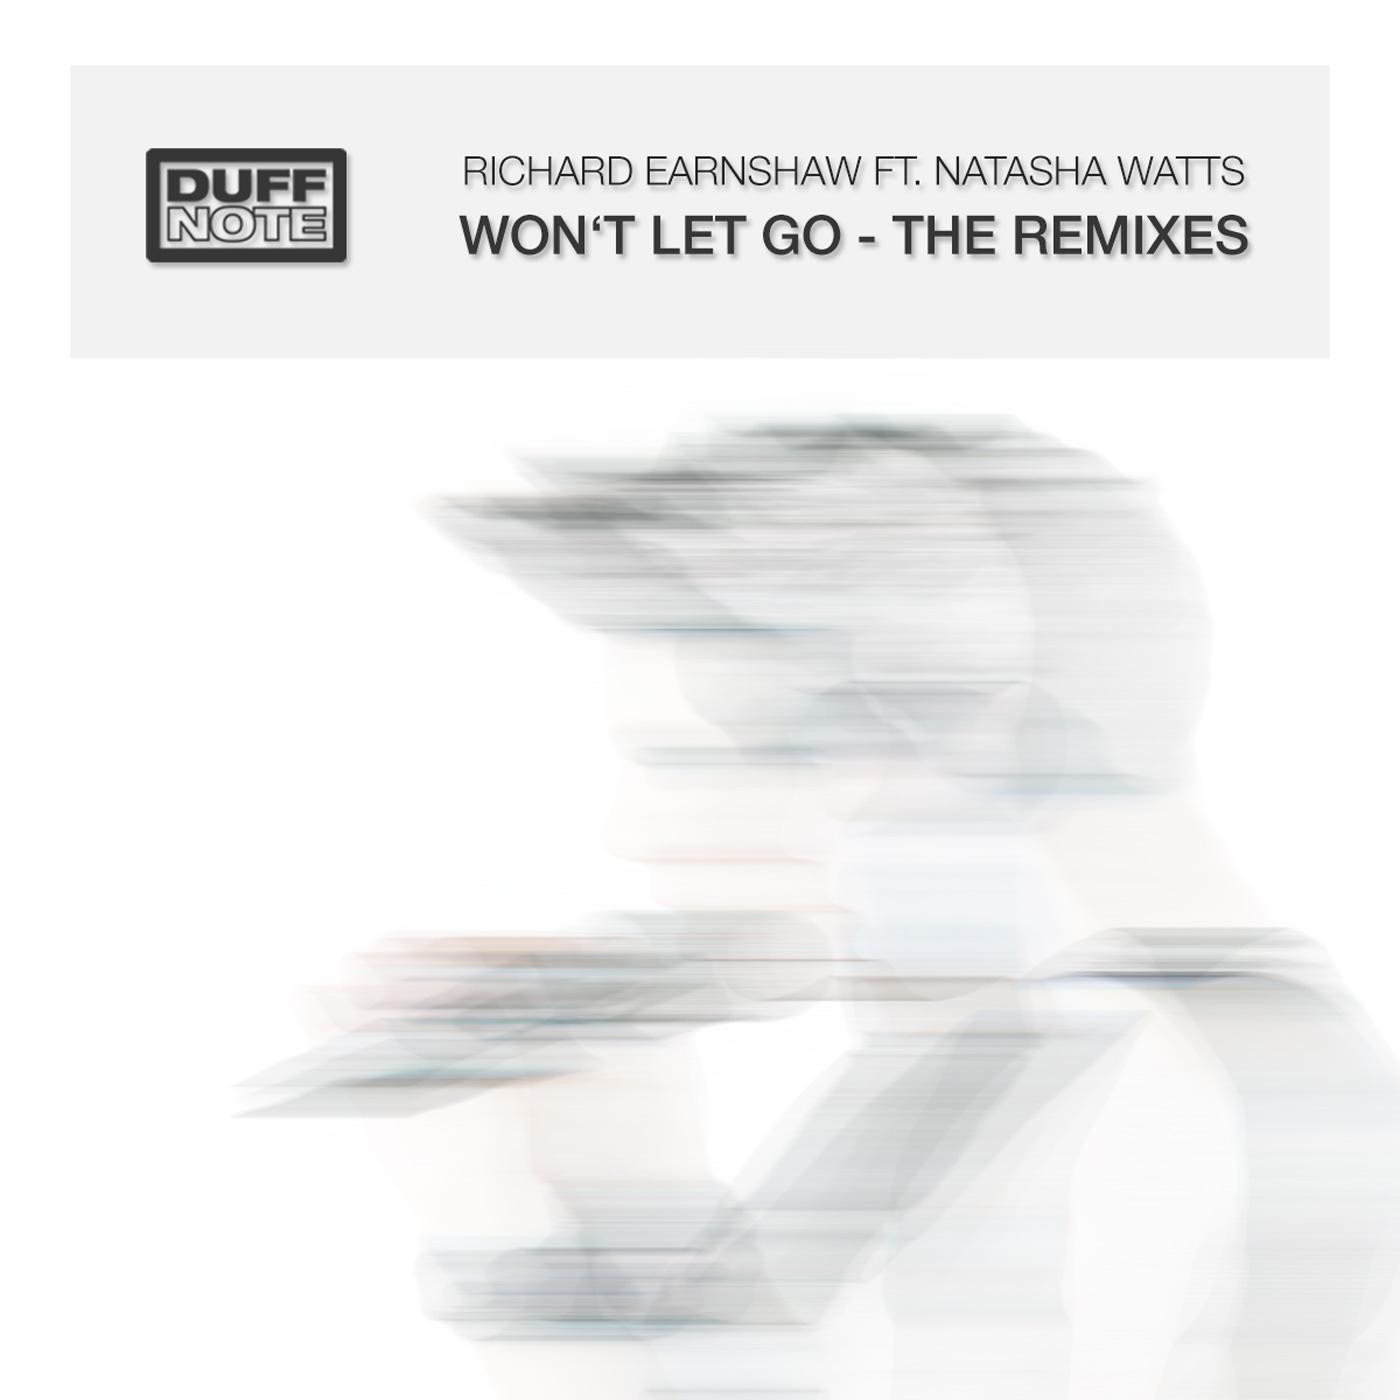 Richard Earnshaw - Won't Let Go (Earnshaw's Clubstrumental)